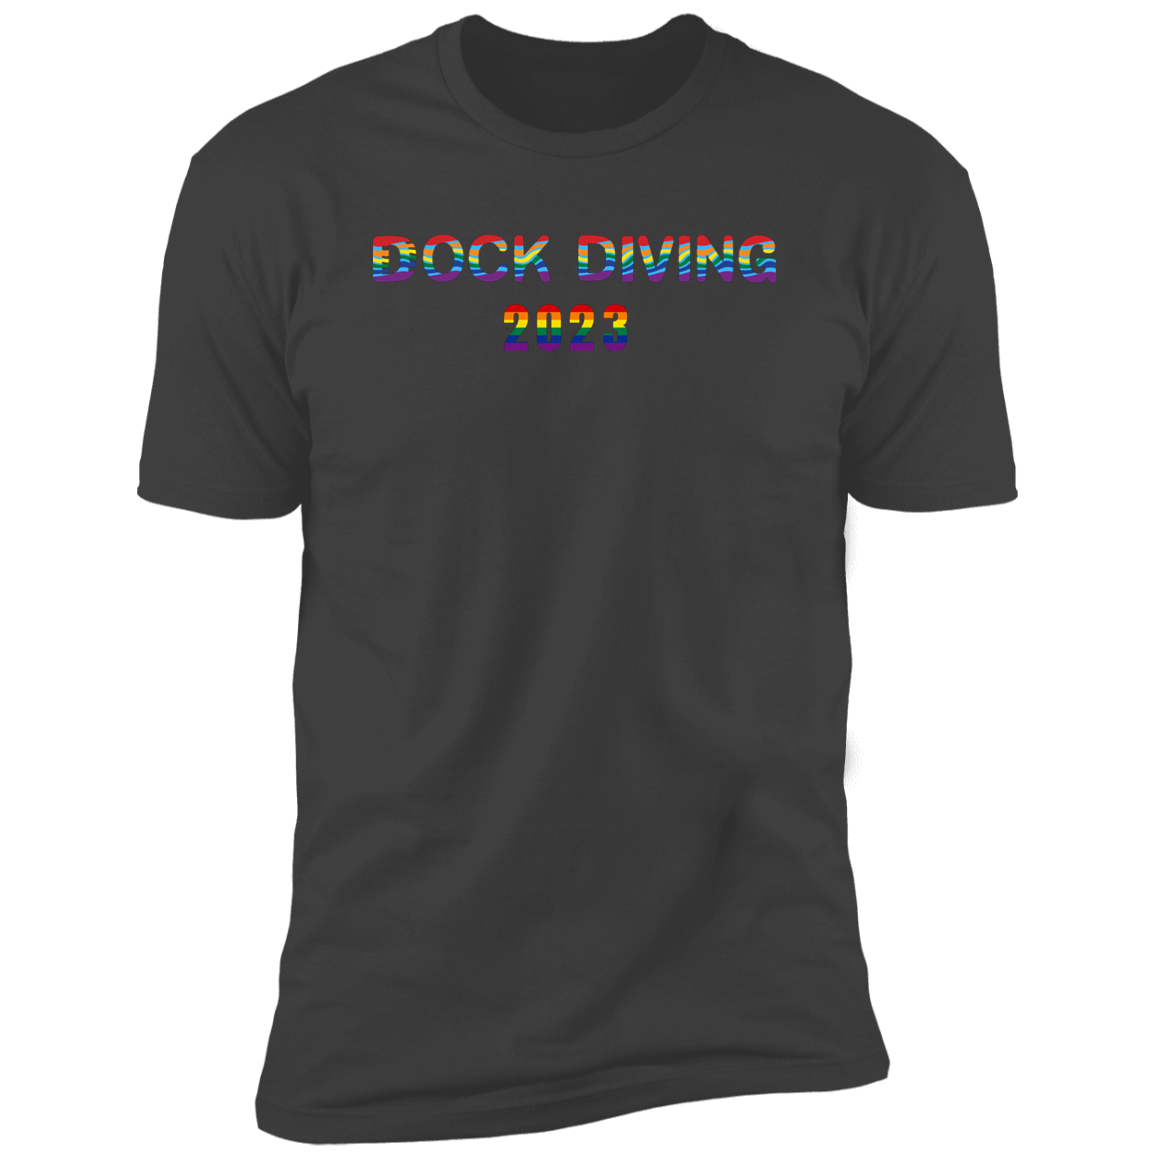 Dock Diving Pride 2023 Dock diving t-shirt, dog pride dock diving shirt for humans, in heavy metal gray